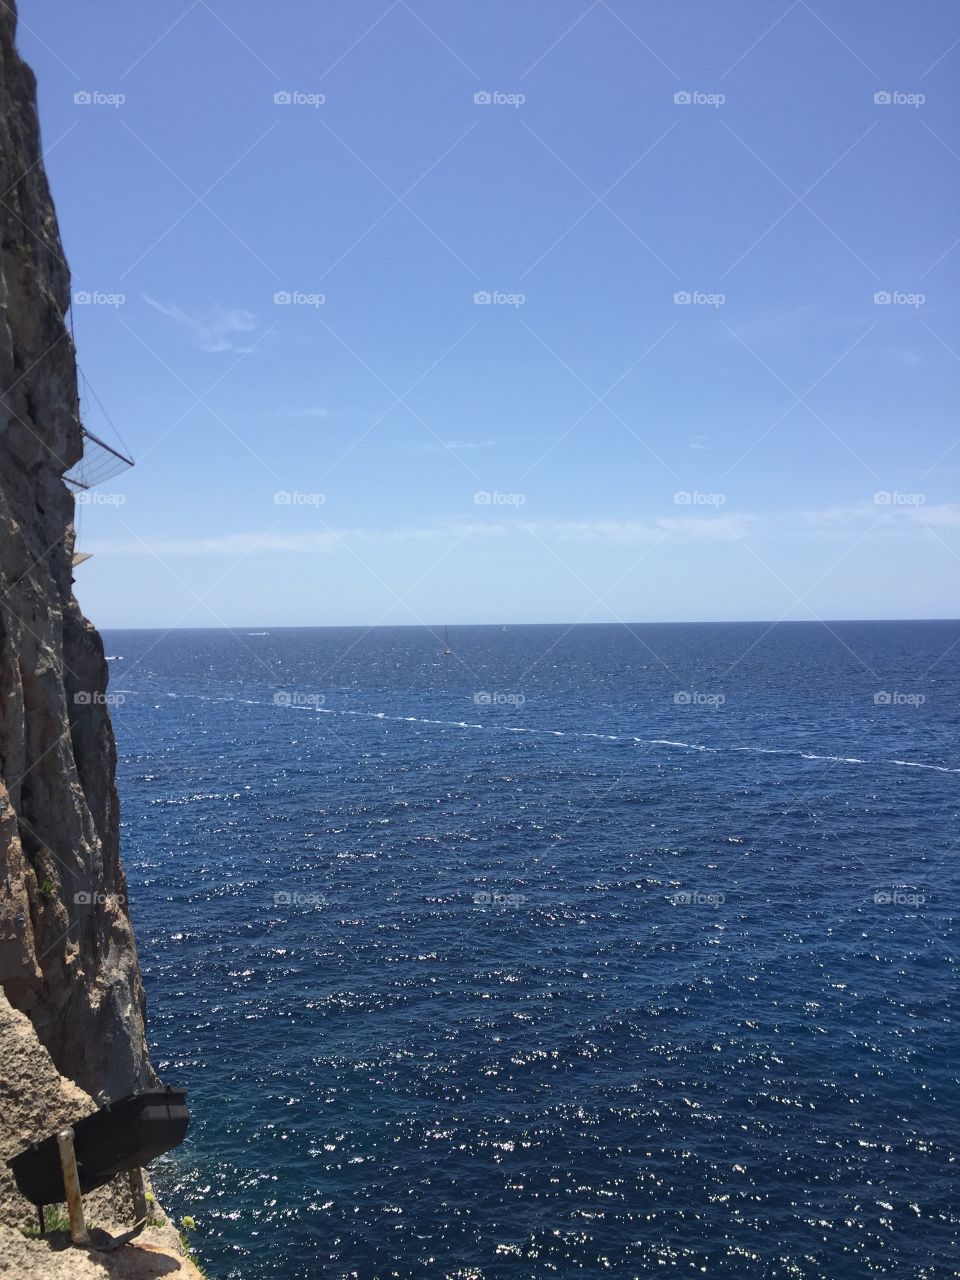 Cova d’en xeroi in Menorca the island